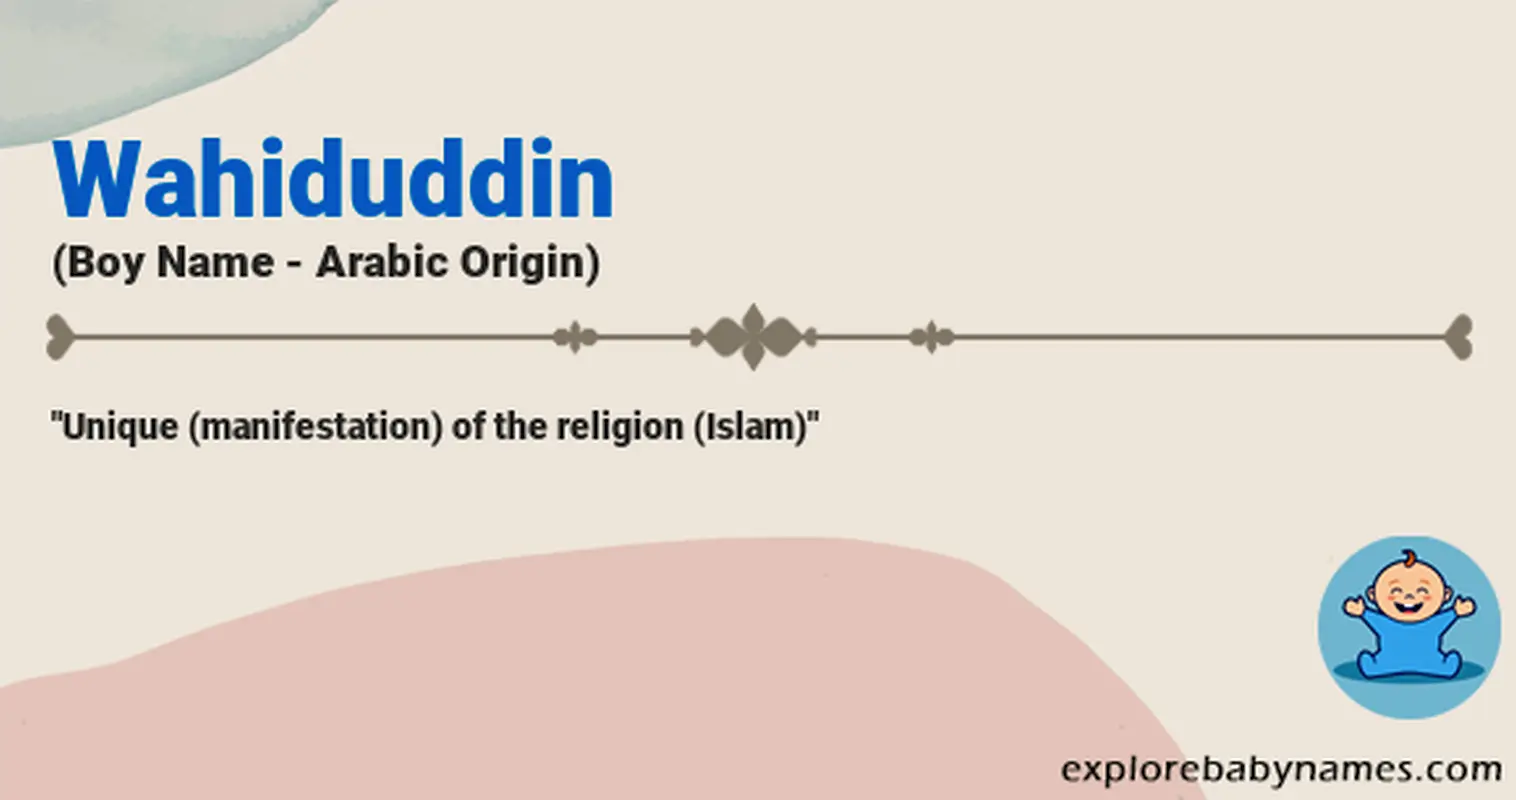 Meaning of Wahiduddin